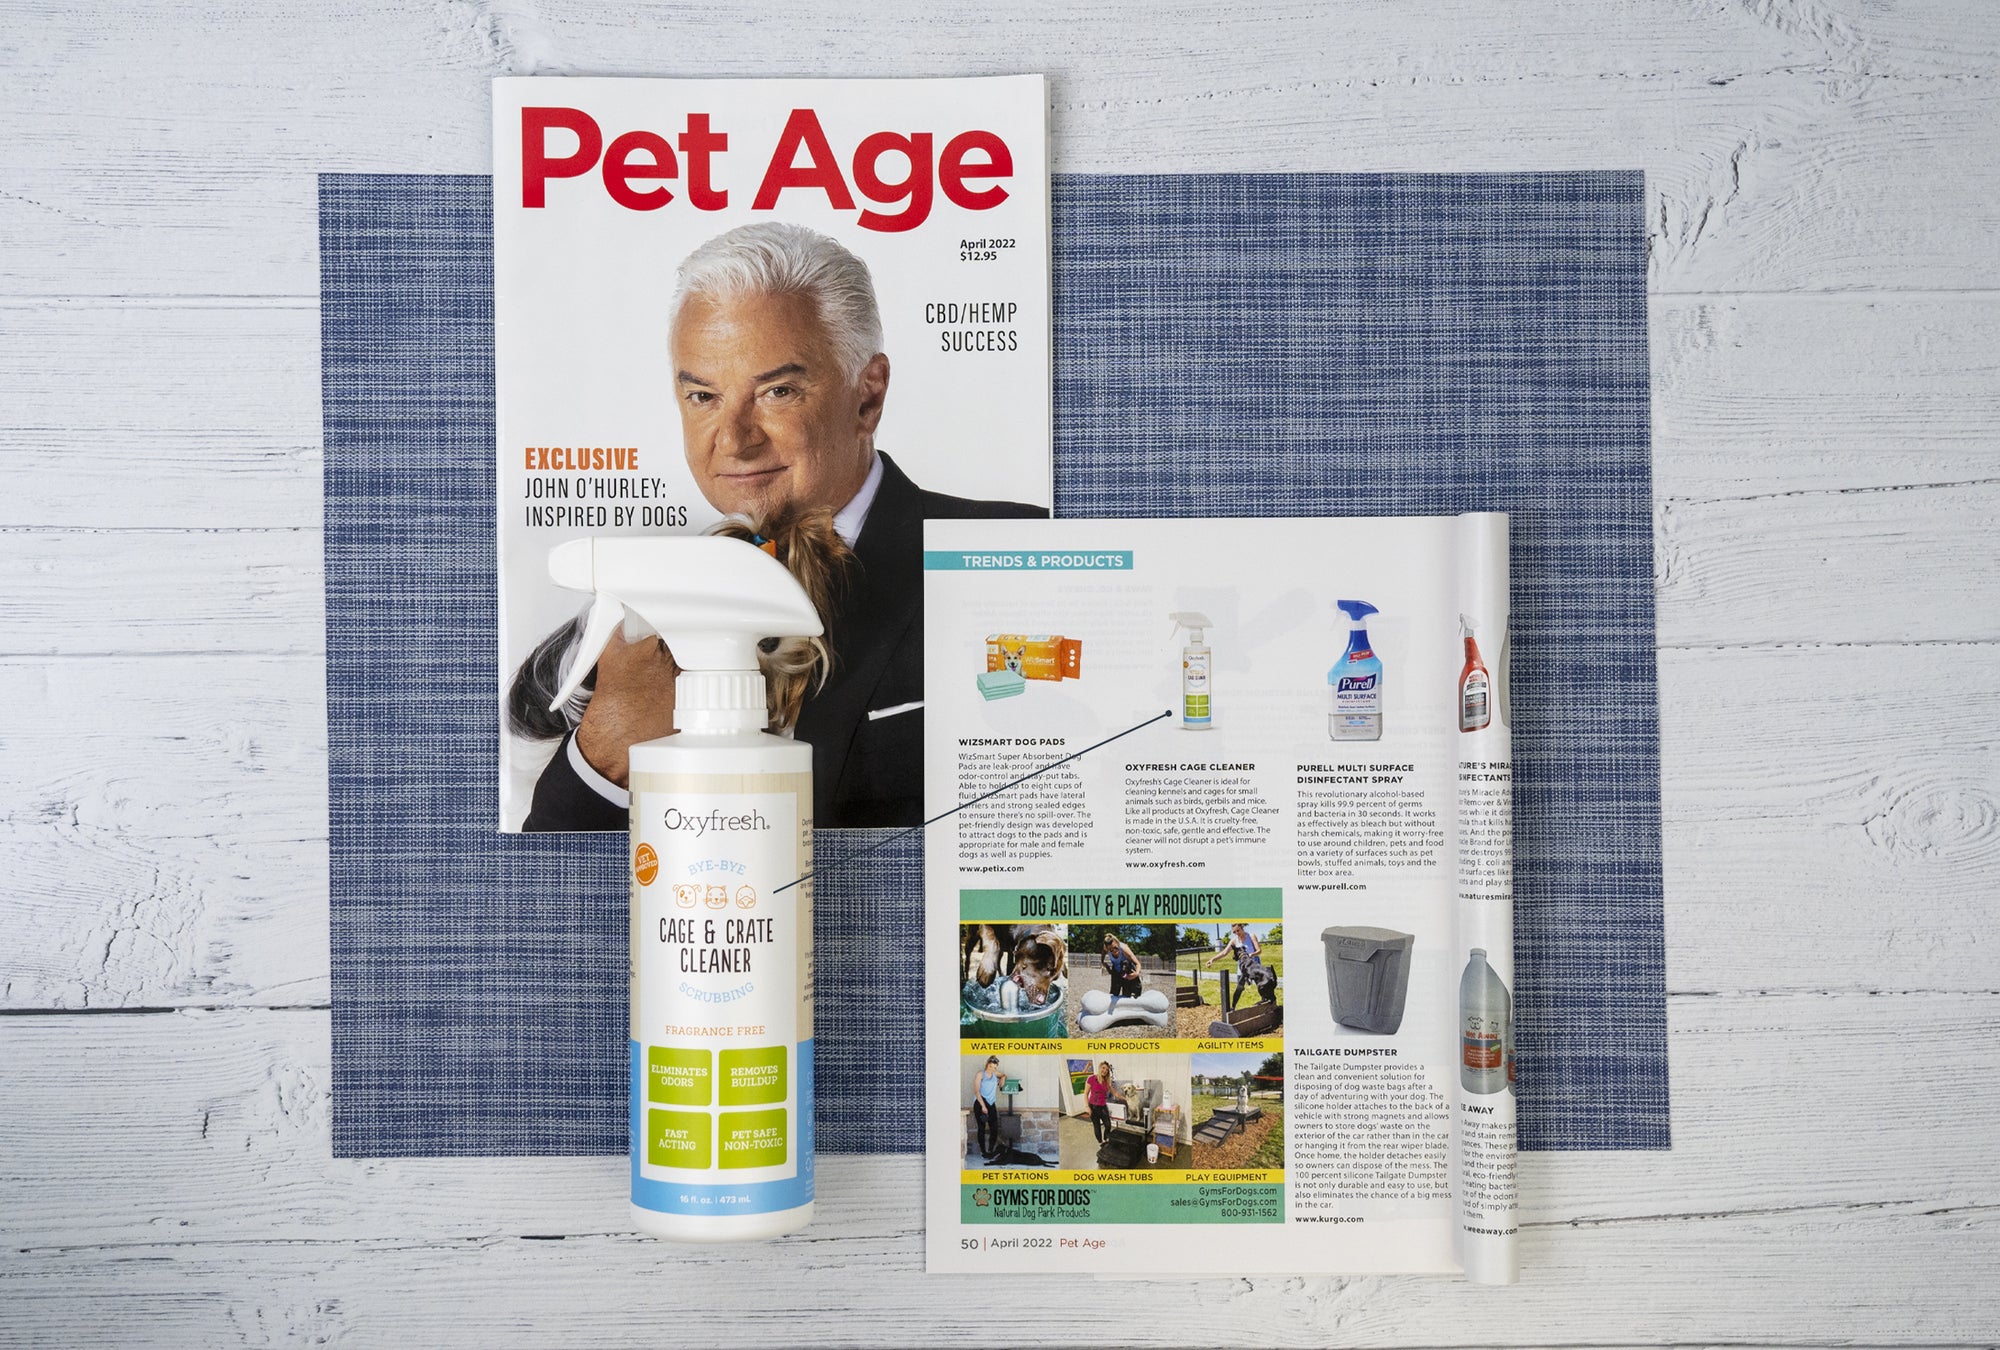 oxyfresh pet deodorizer next to article in Pet Age magazine